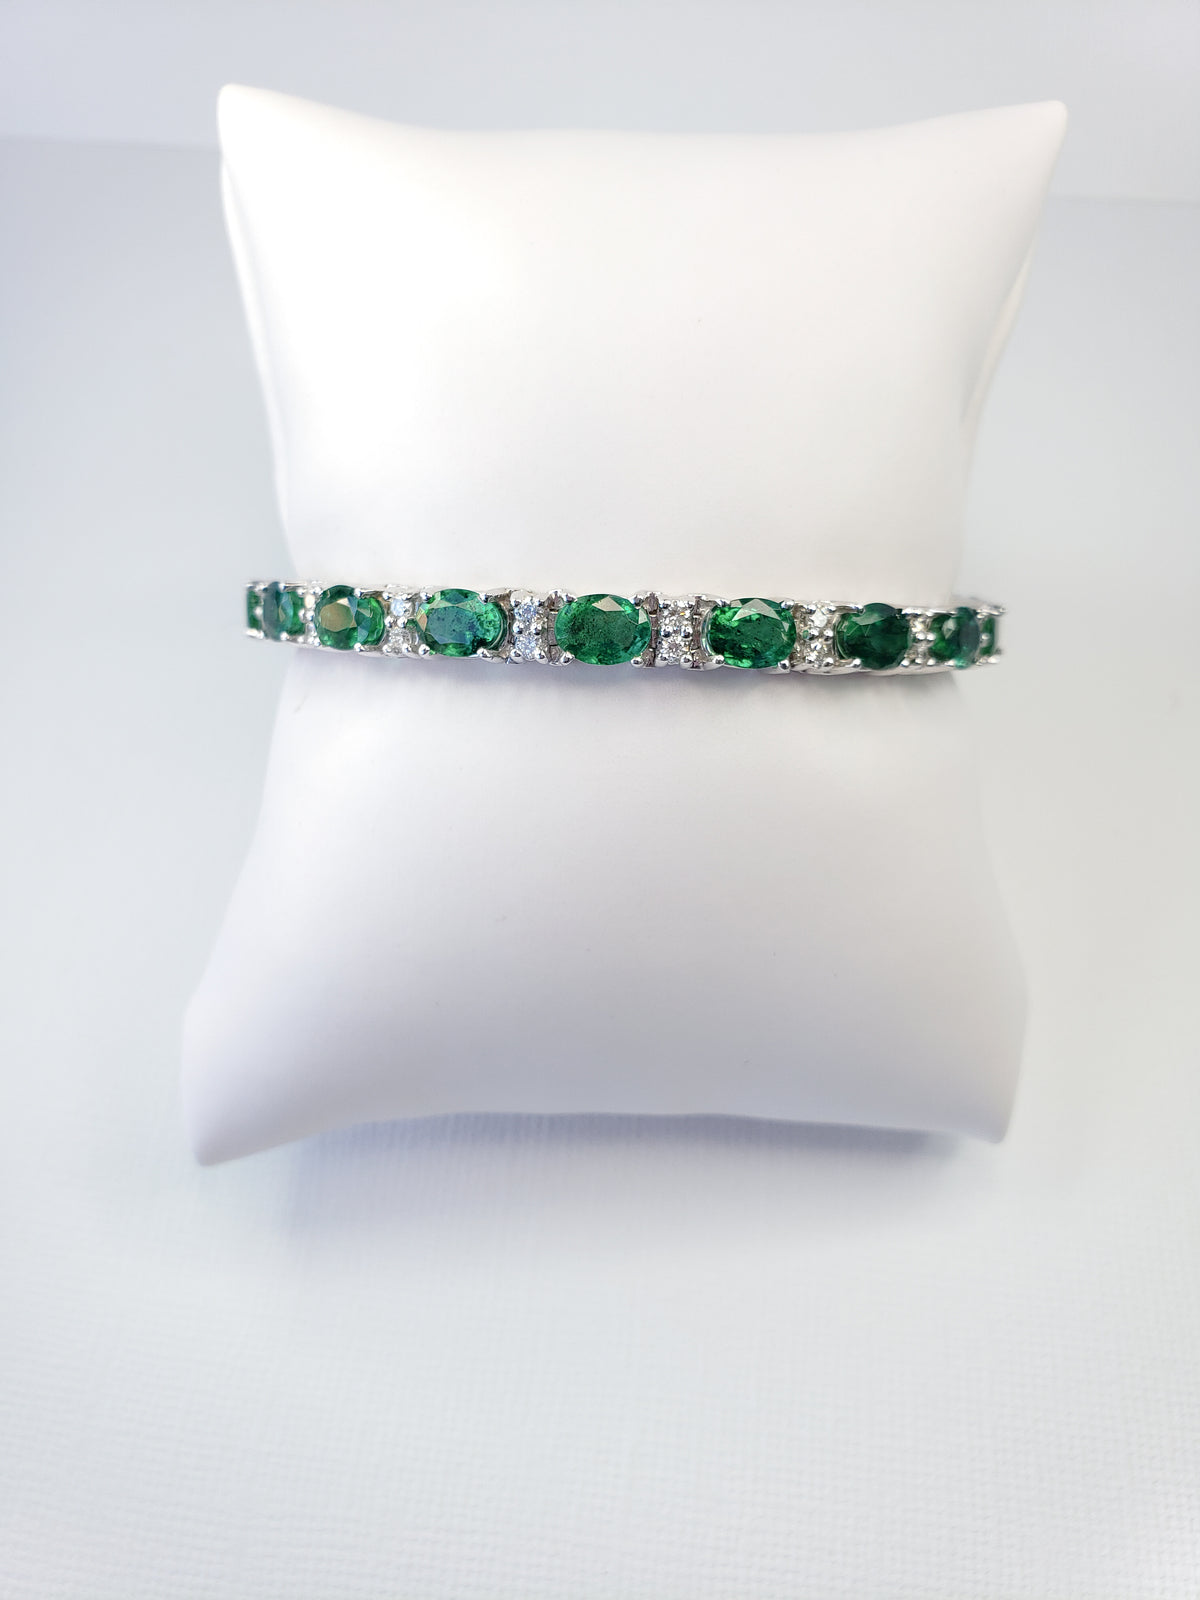 Oval Emerald Tennis Bracelet with Diamonds